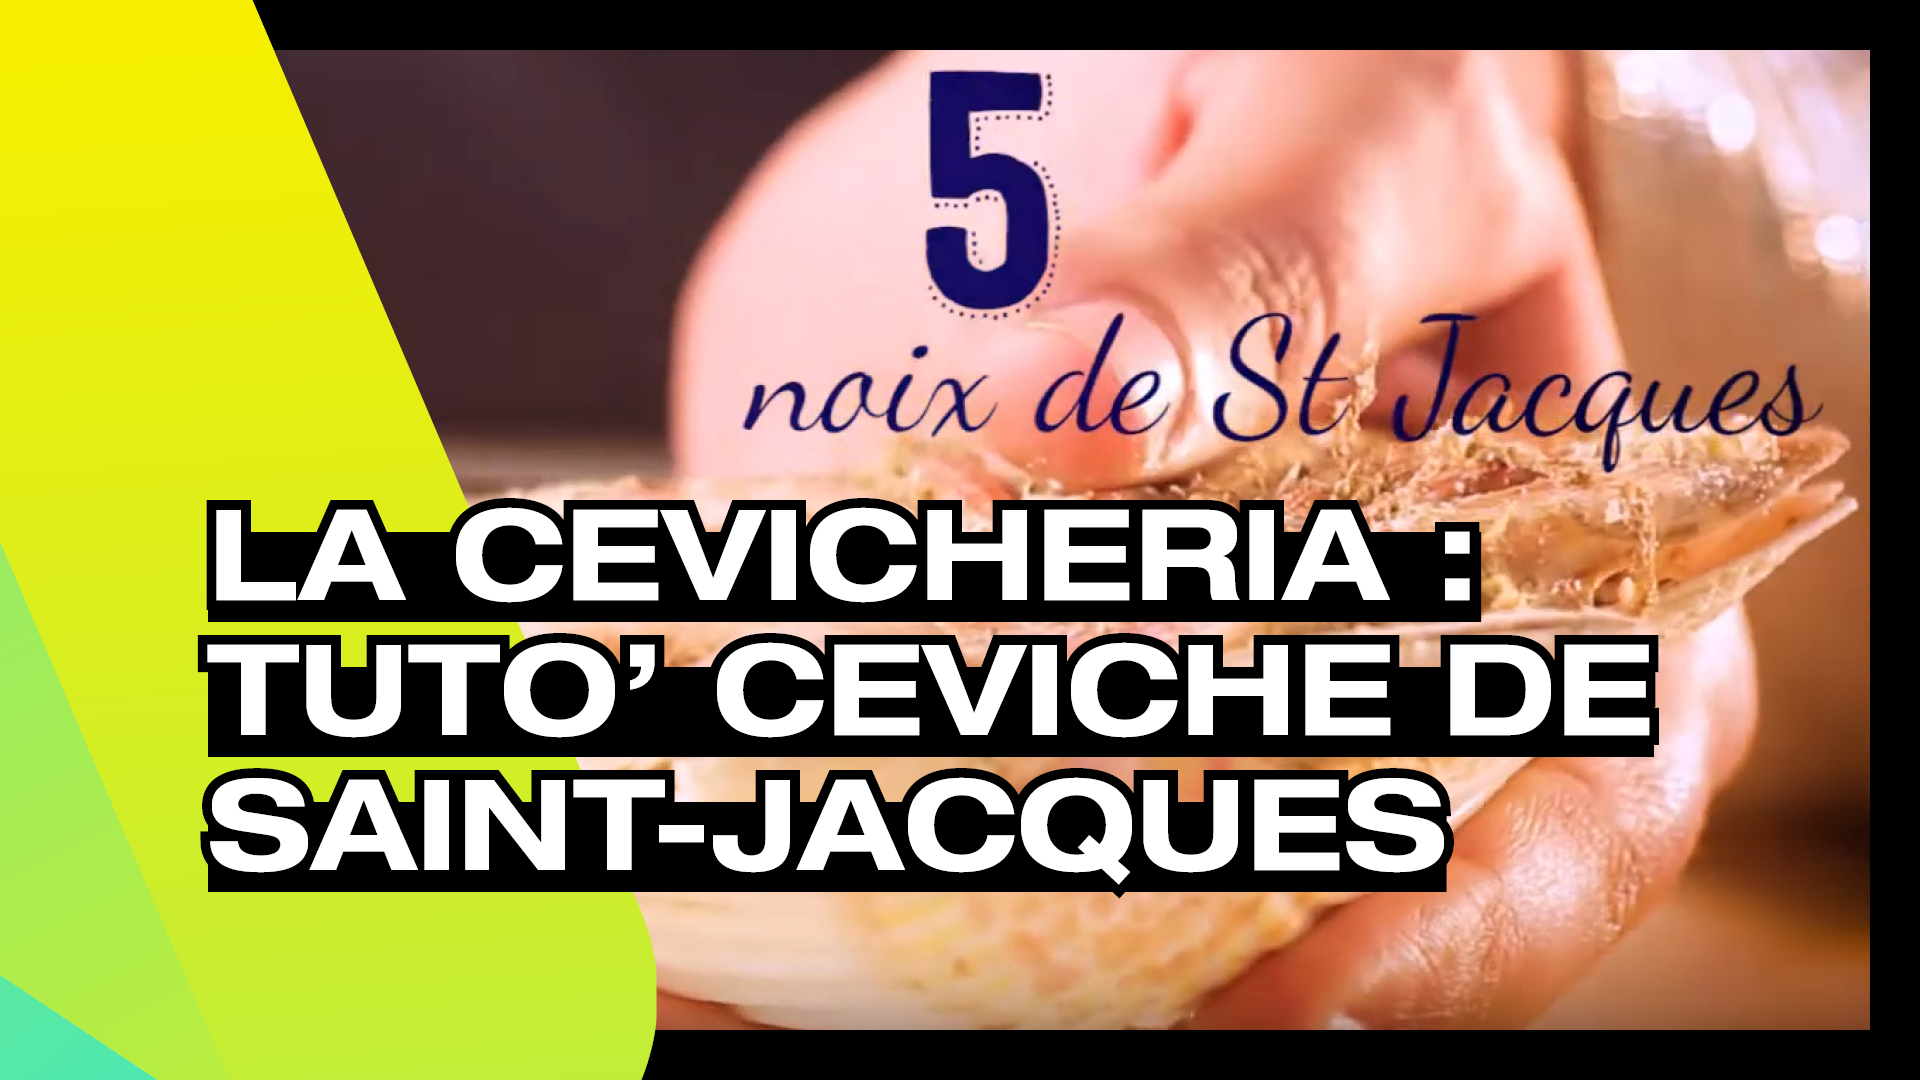 La Cevicheria - Tuto'Ceviche de Saint-Jacques